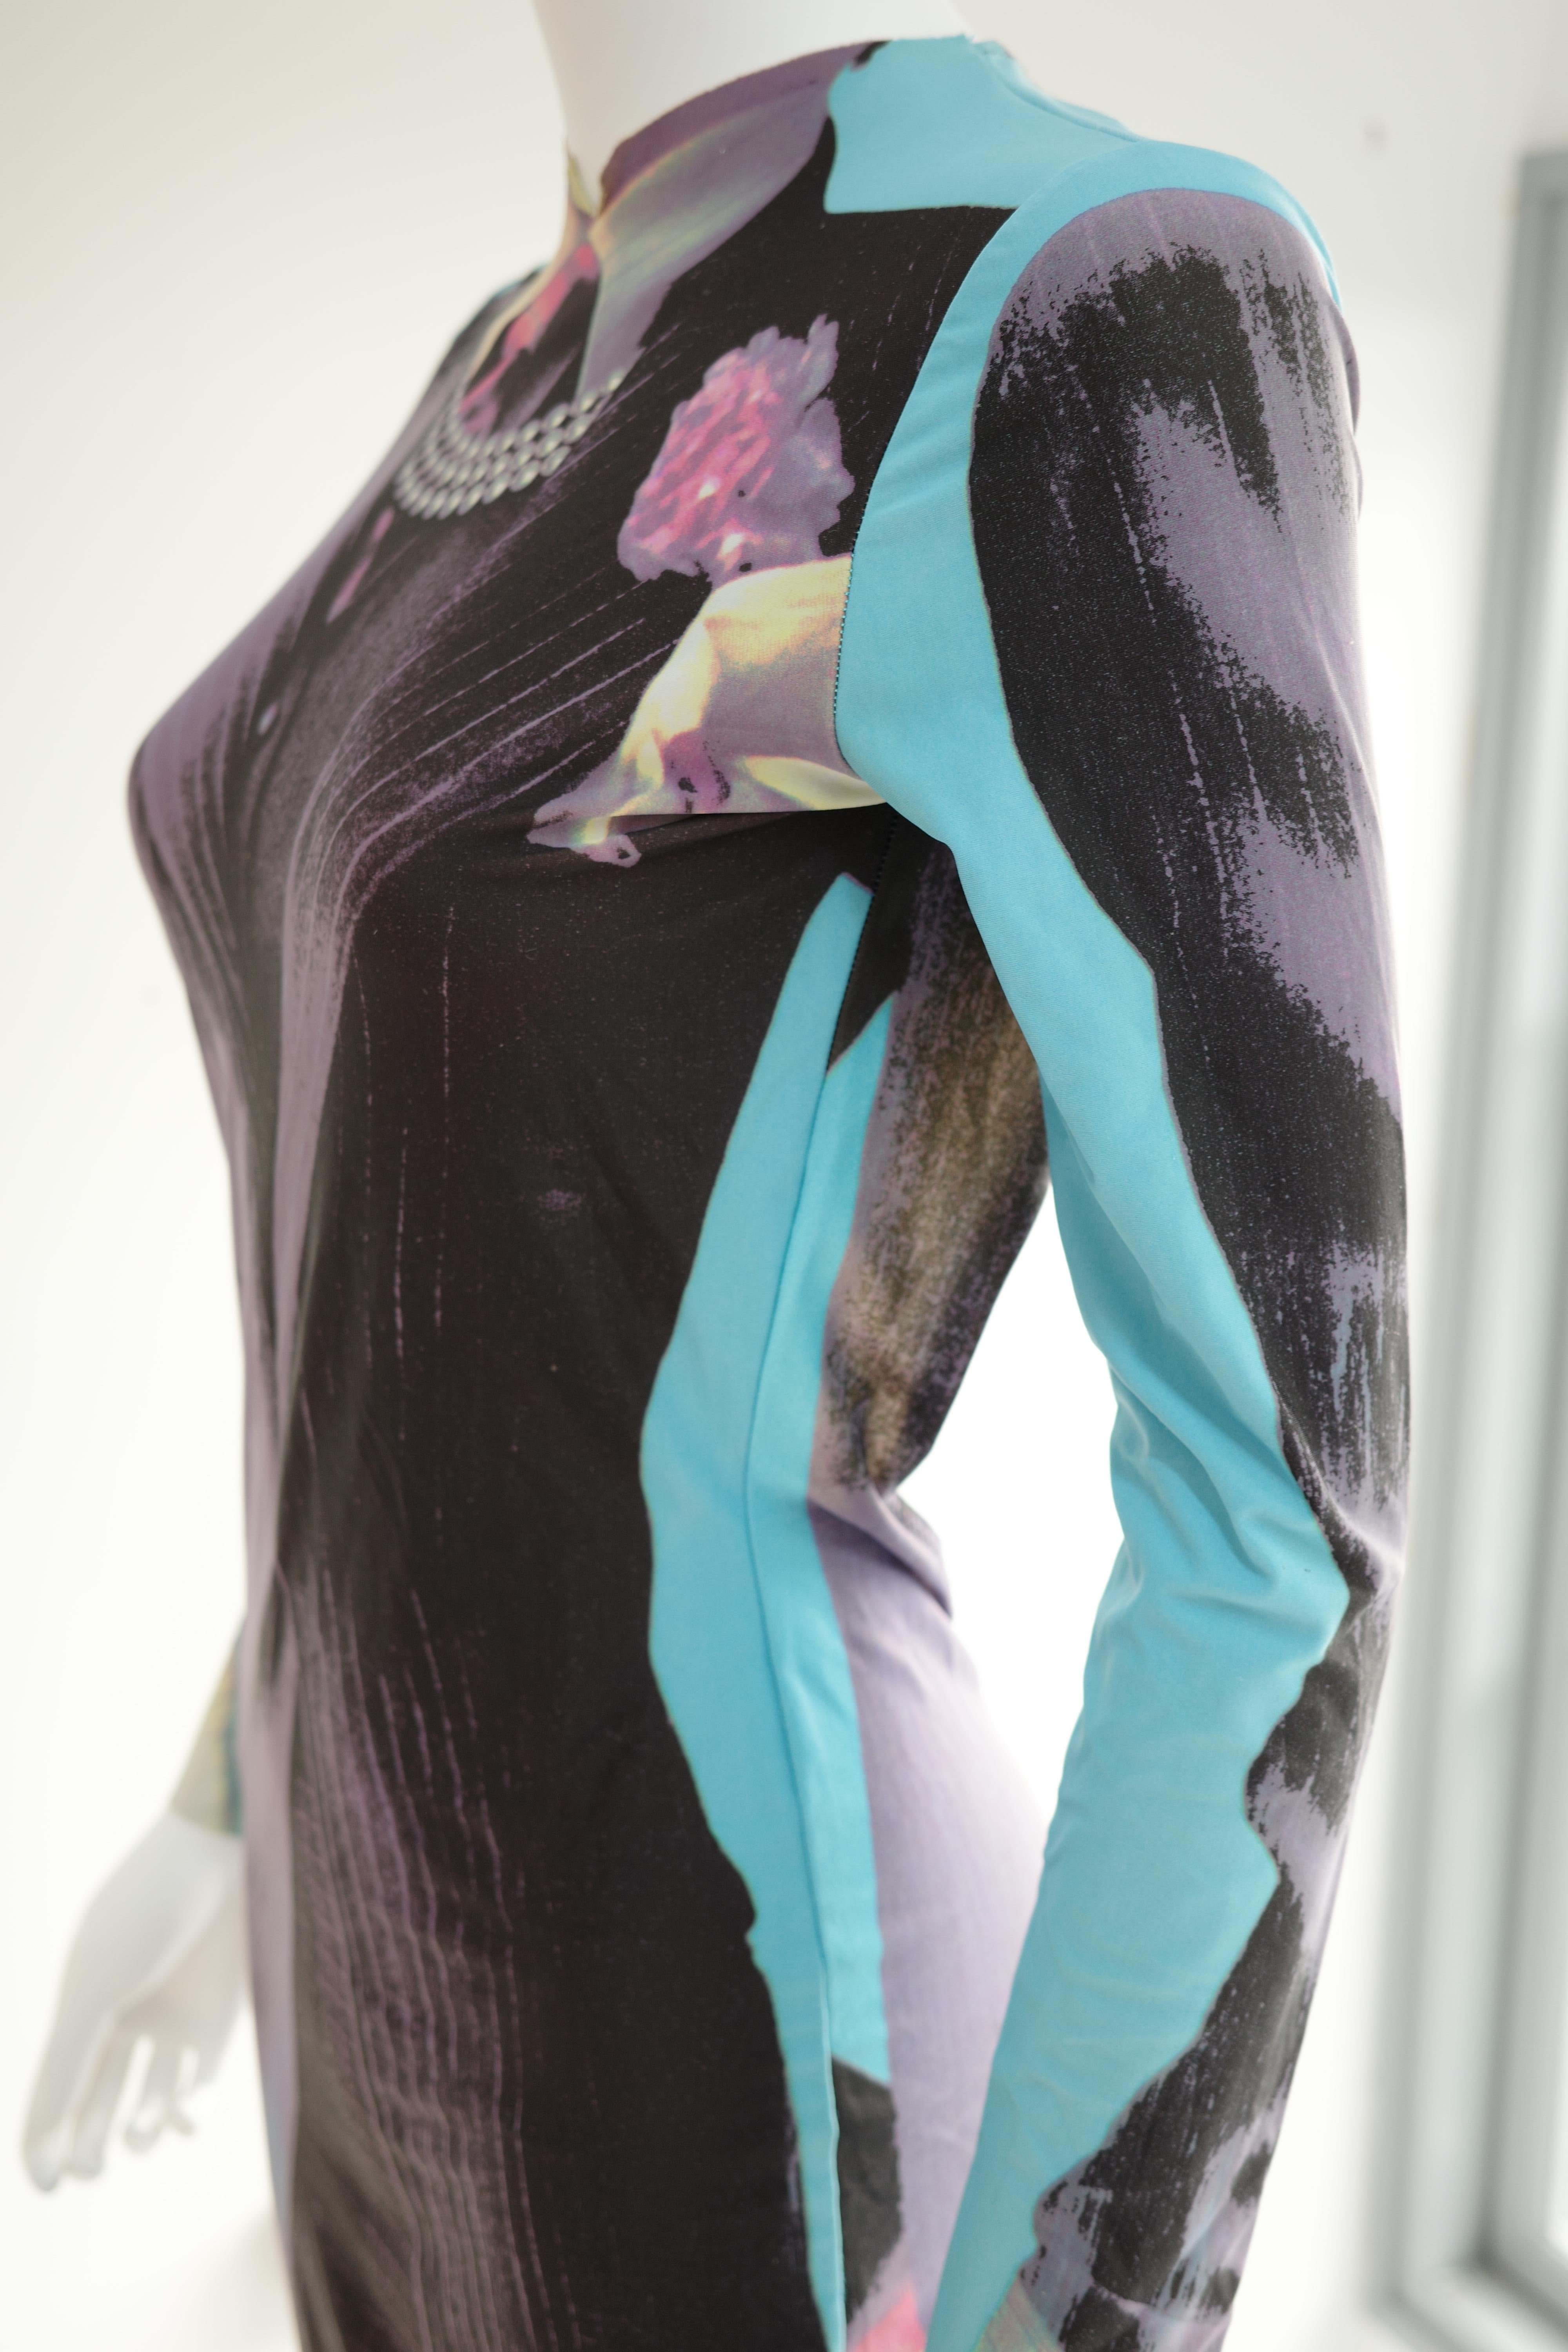 Jean Paul Gaultier A/W 1996 Tuxedo Print Dress  In Good Condition For Sale In London, GB